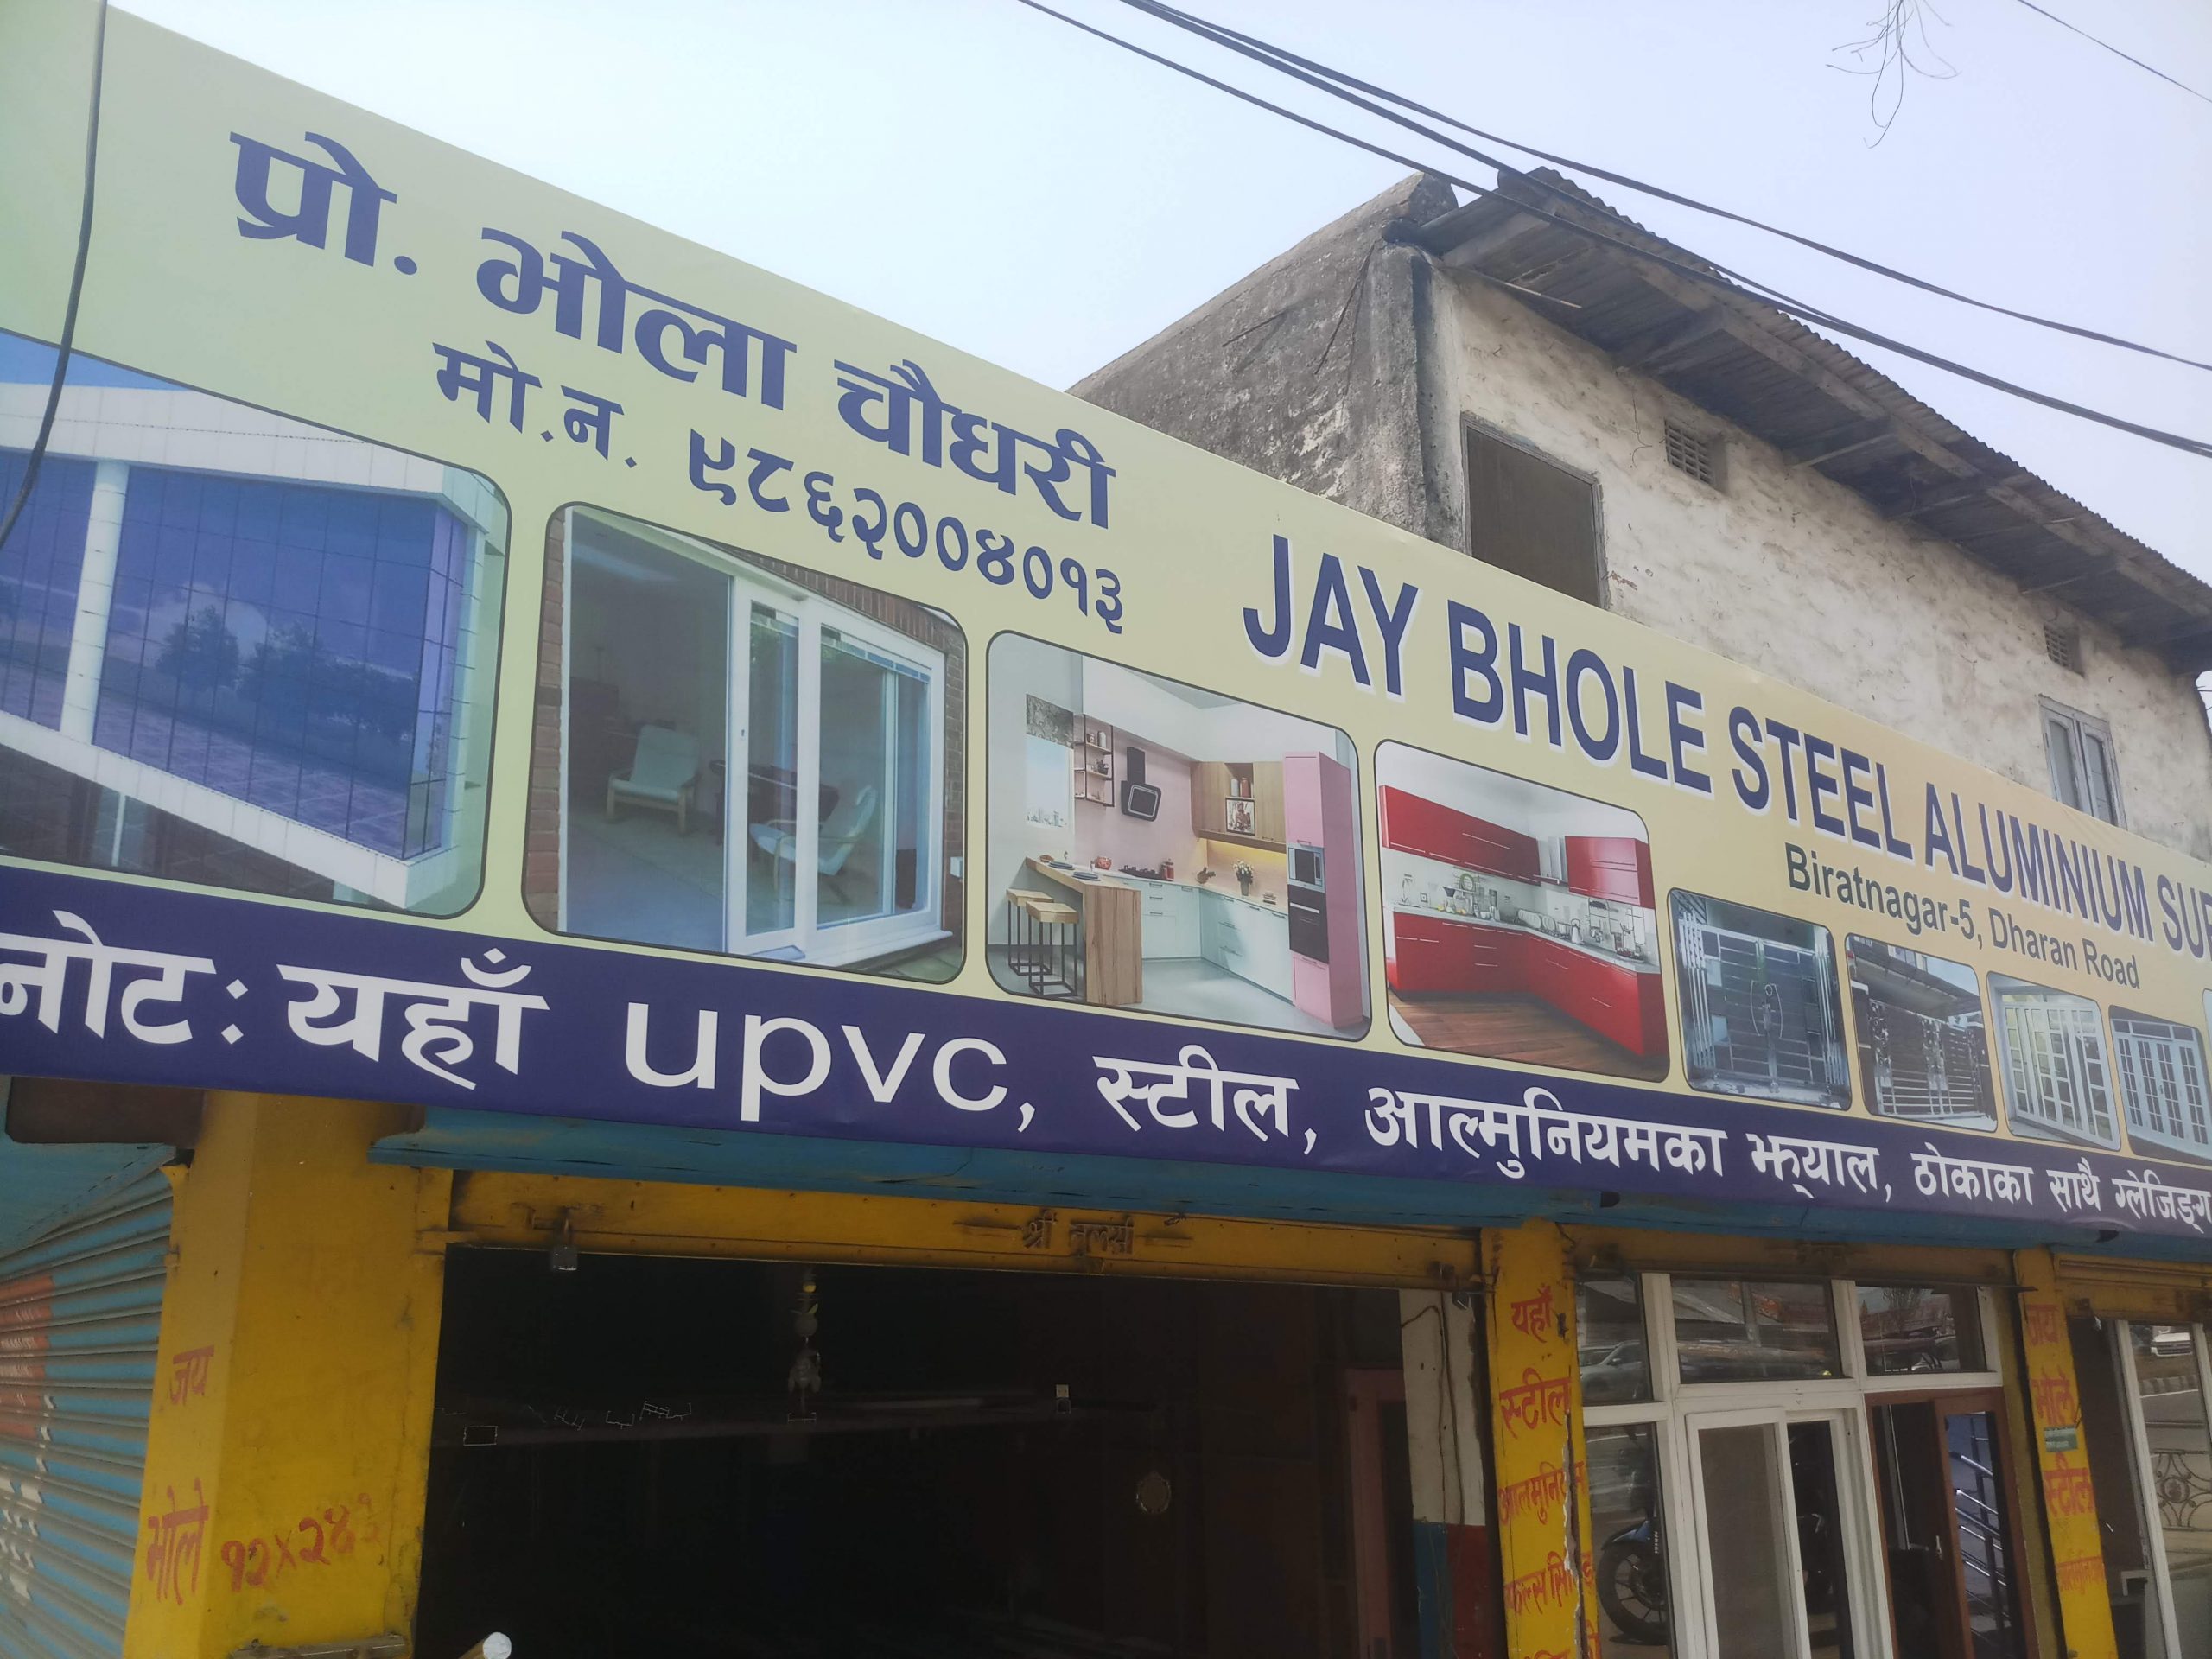 Jai Bhole steel and aluminium and suppliers